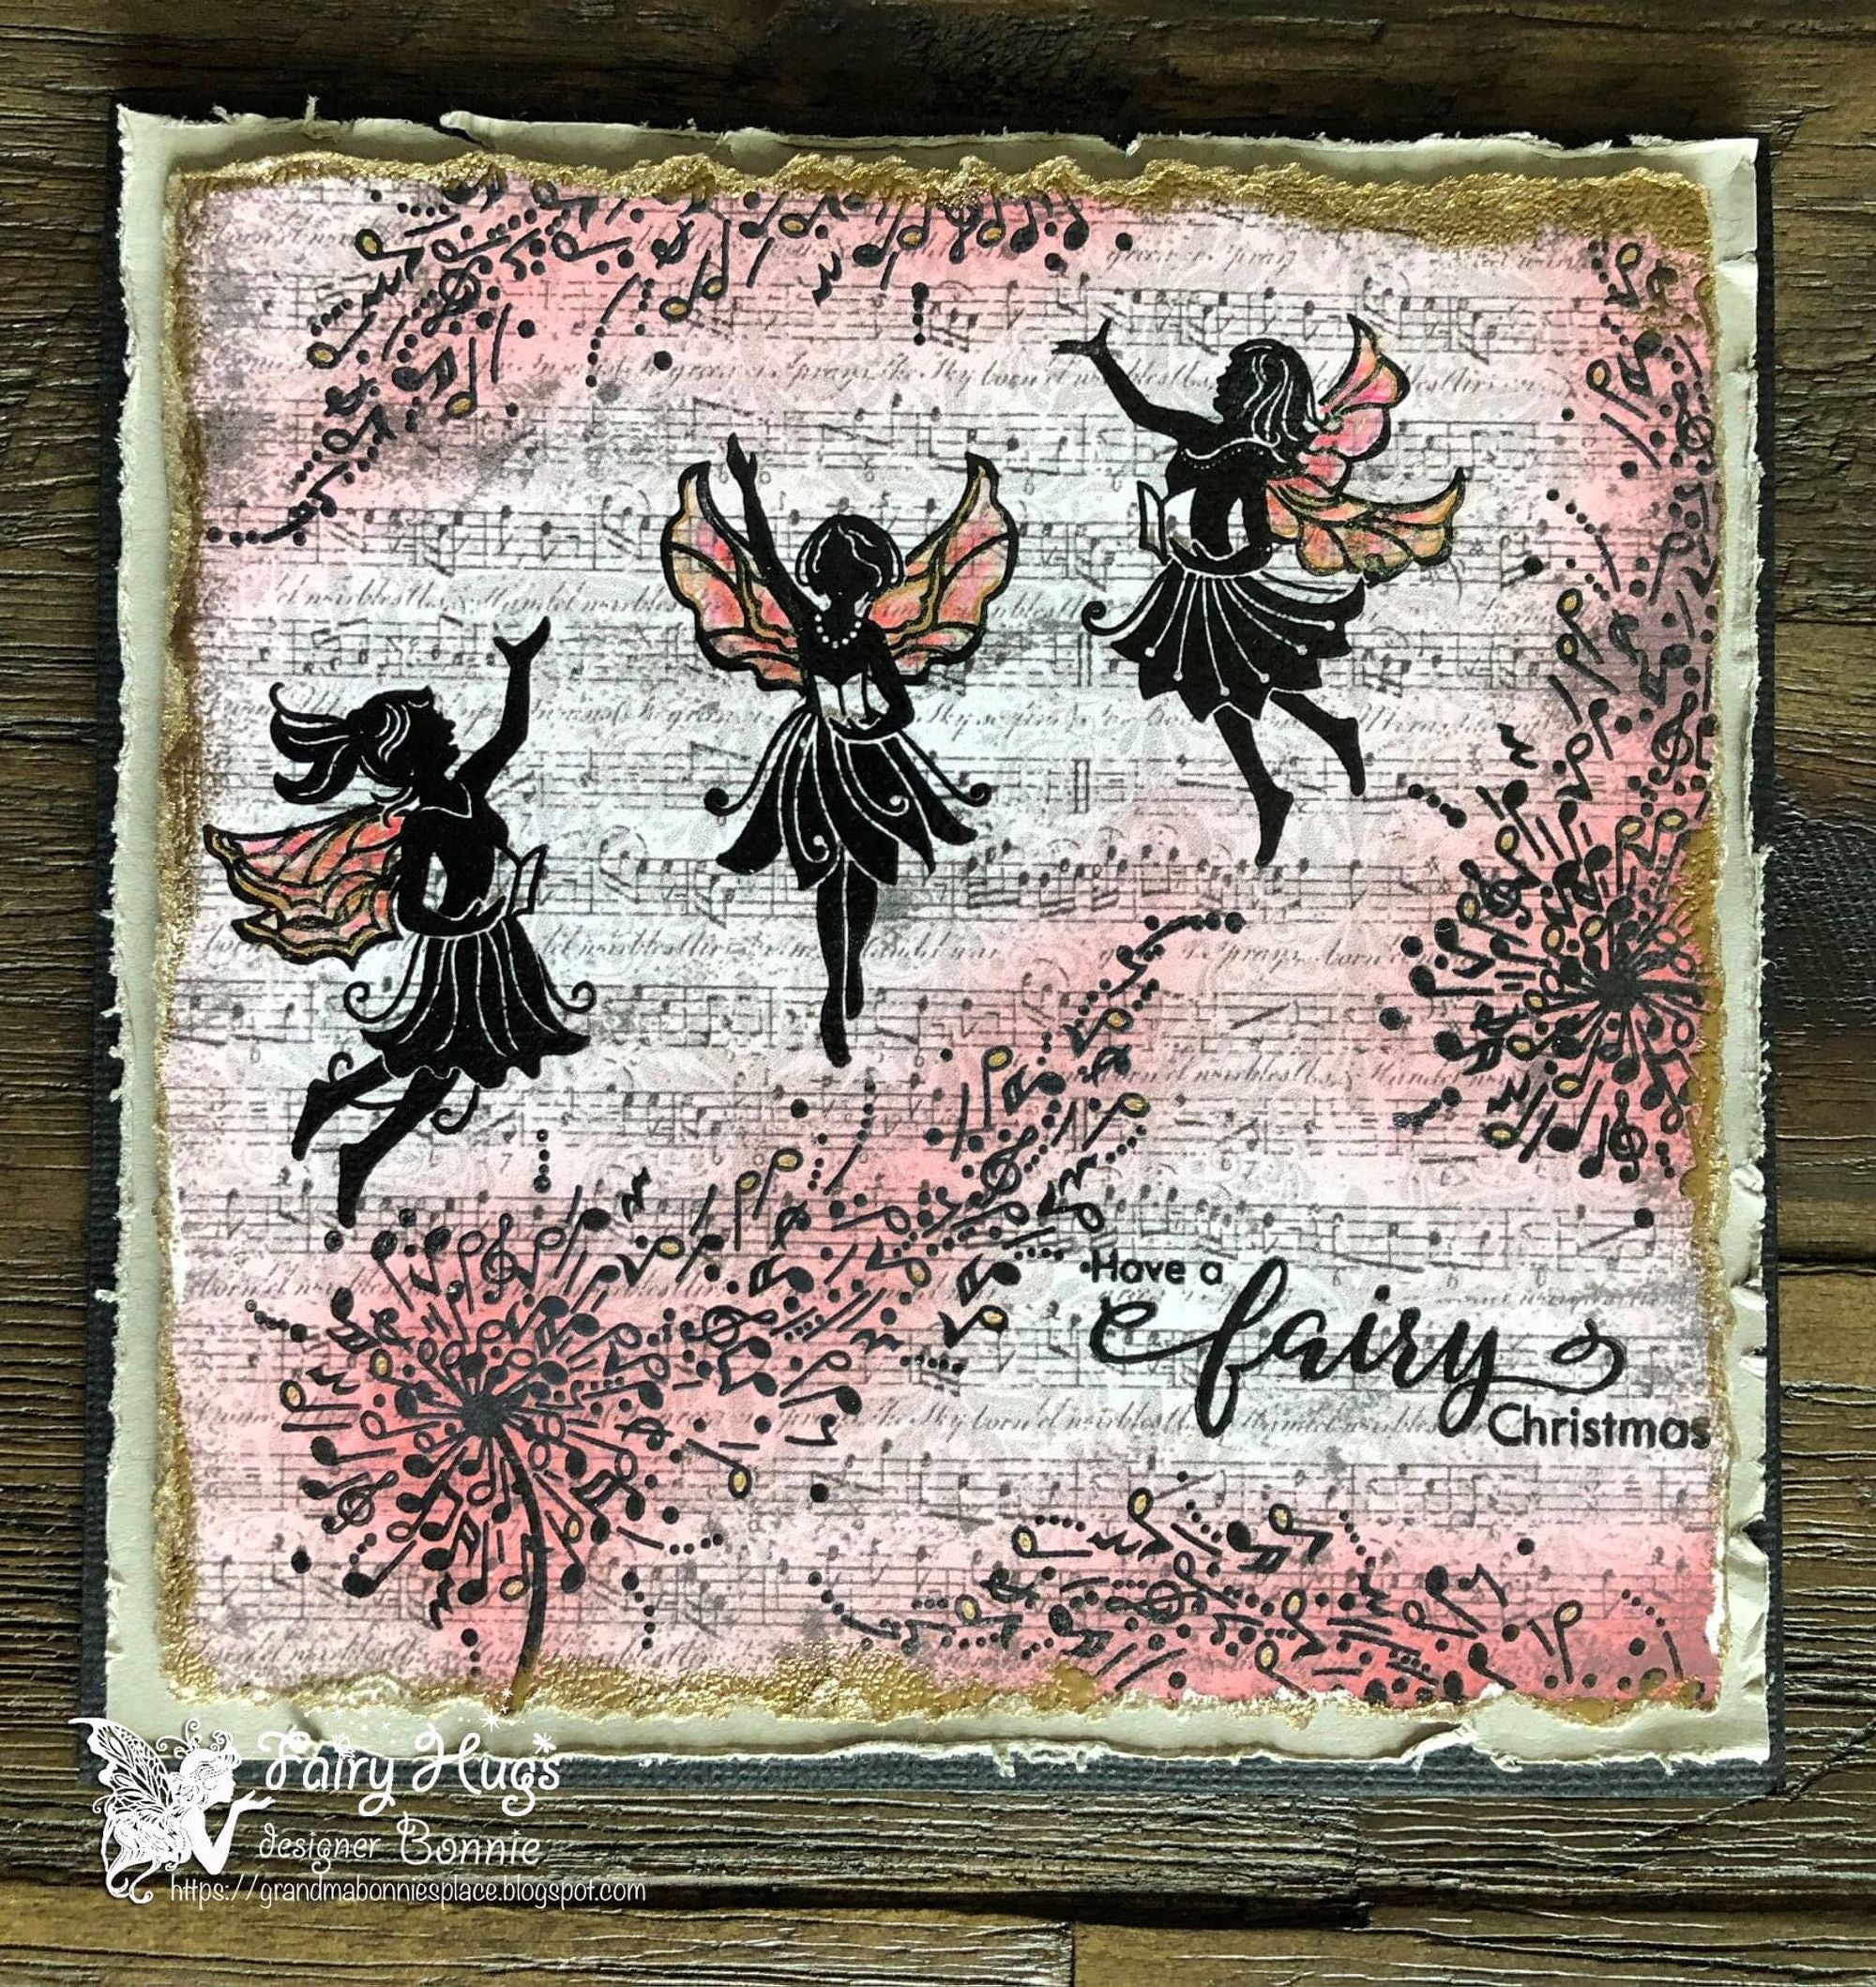 Fairy Hugs Stamps - Harmony